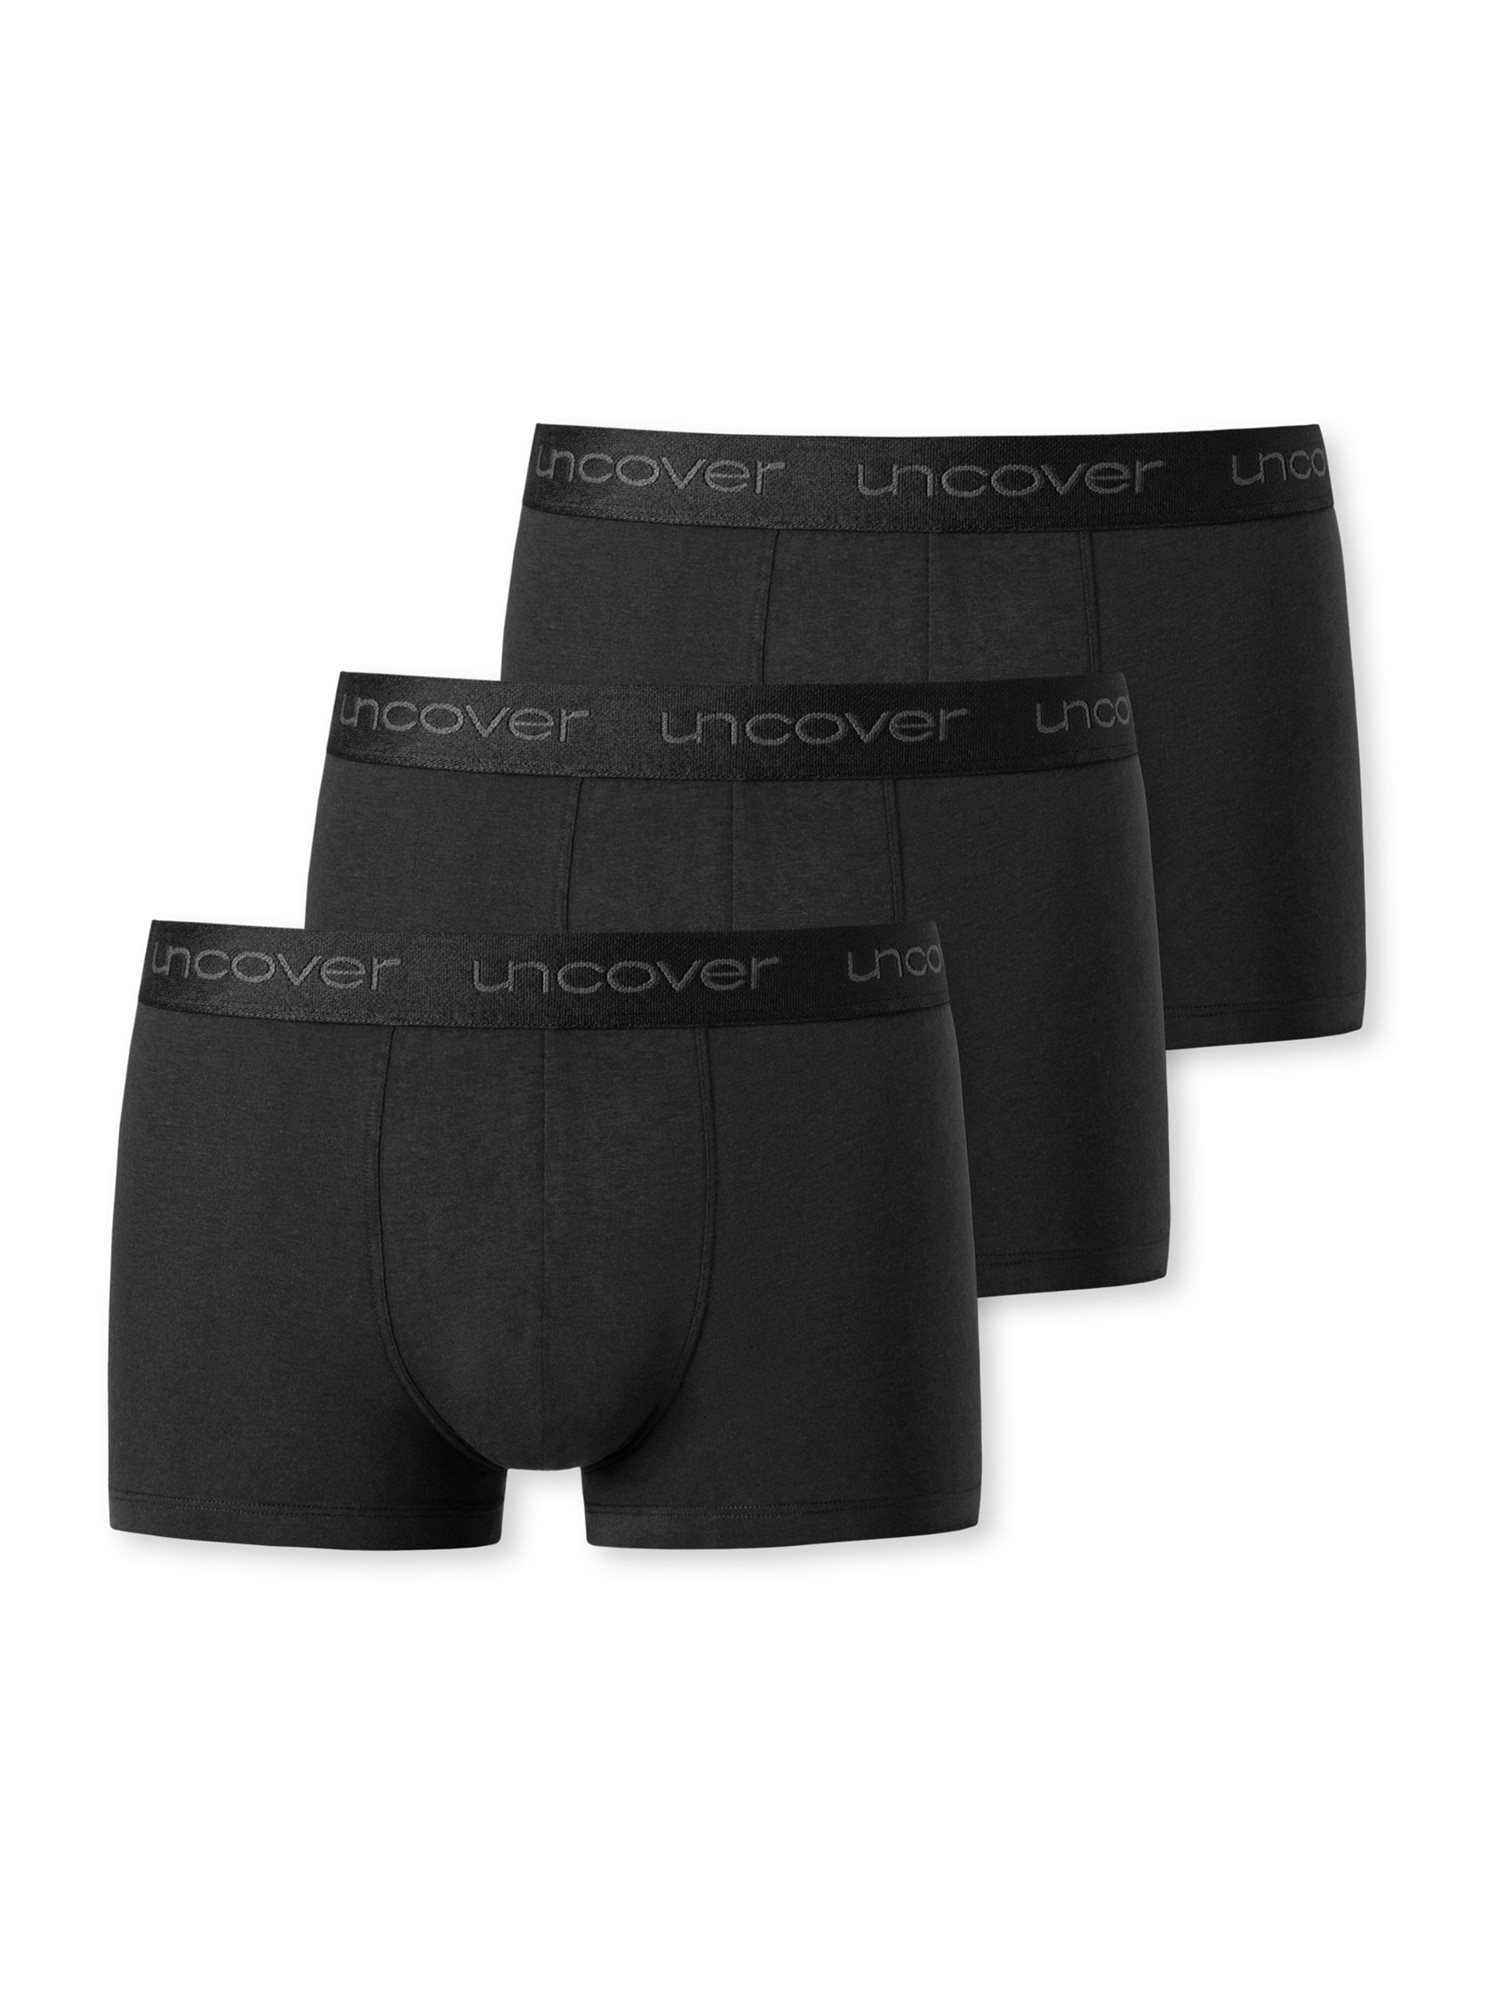 uncover by SCHIESSER Boxer trumpikės 'Uncover' juoda